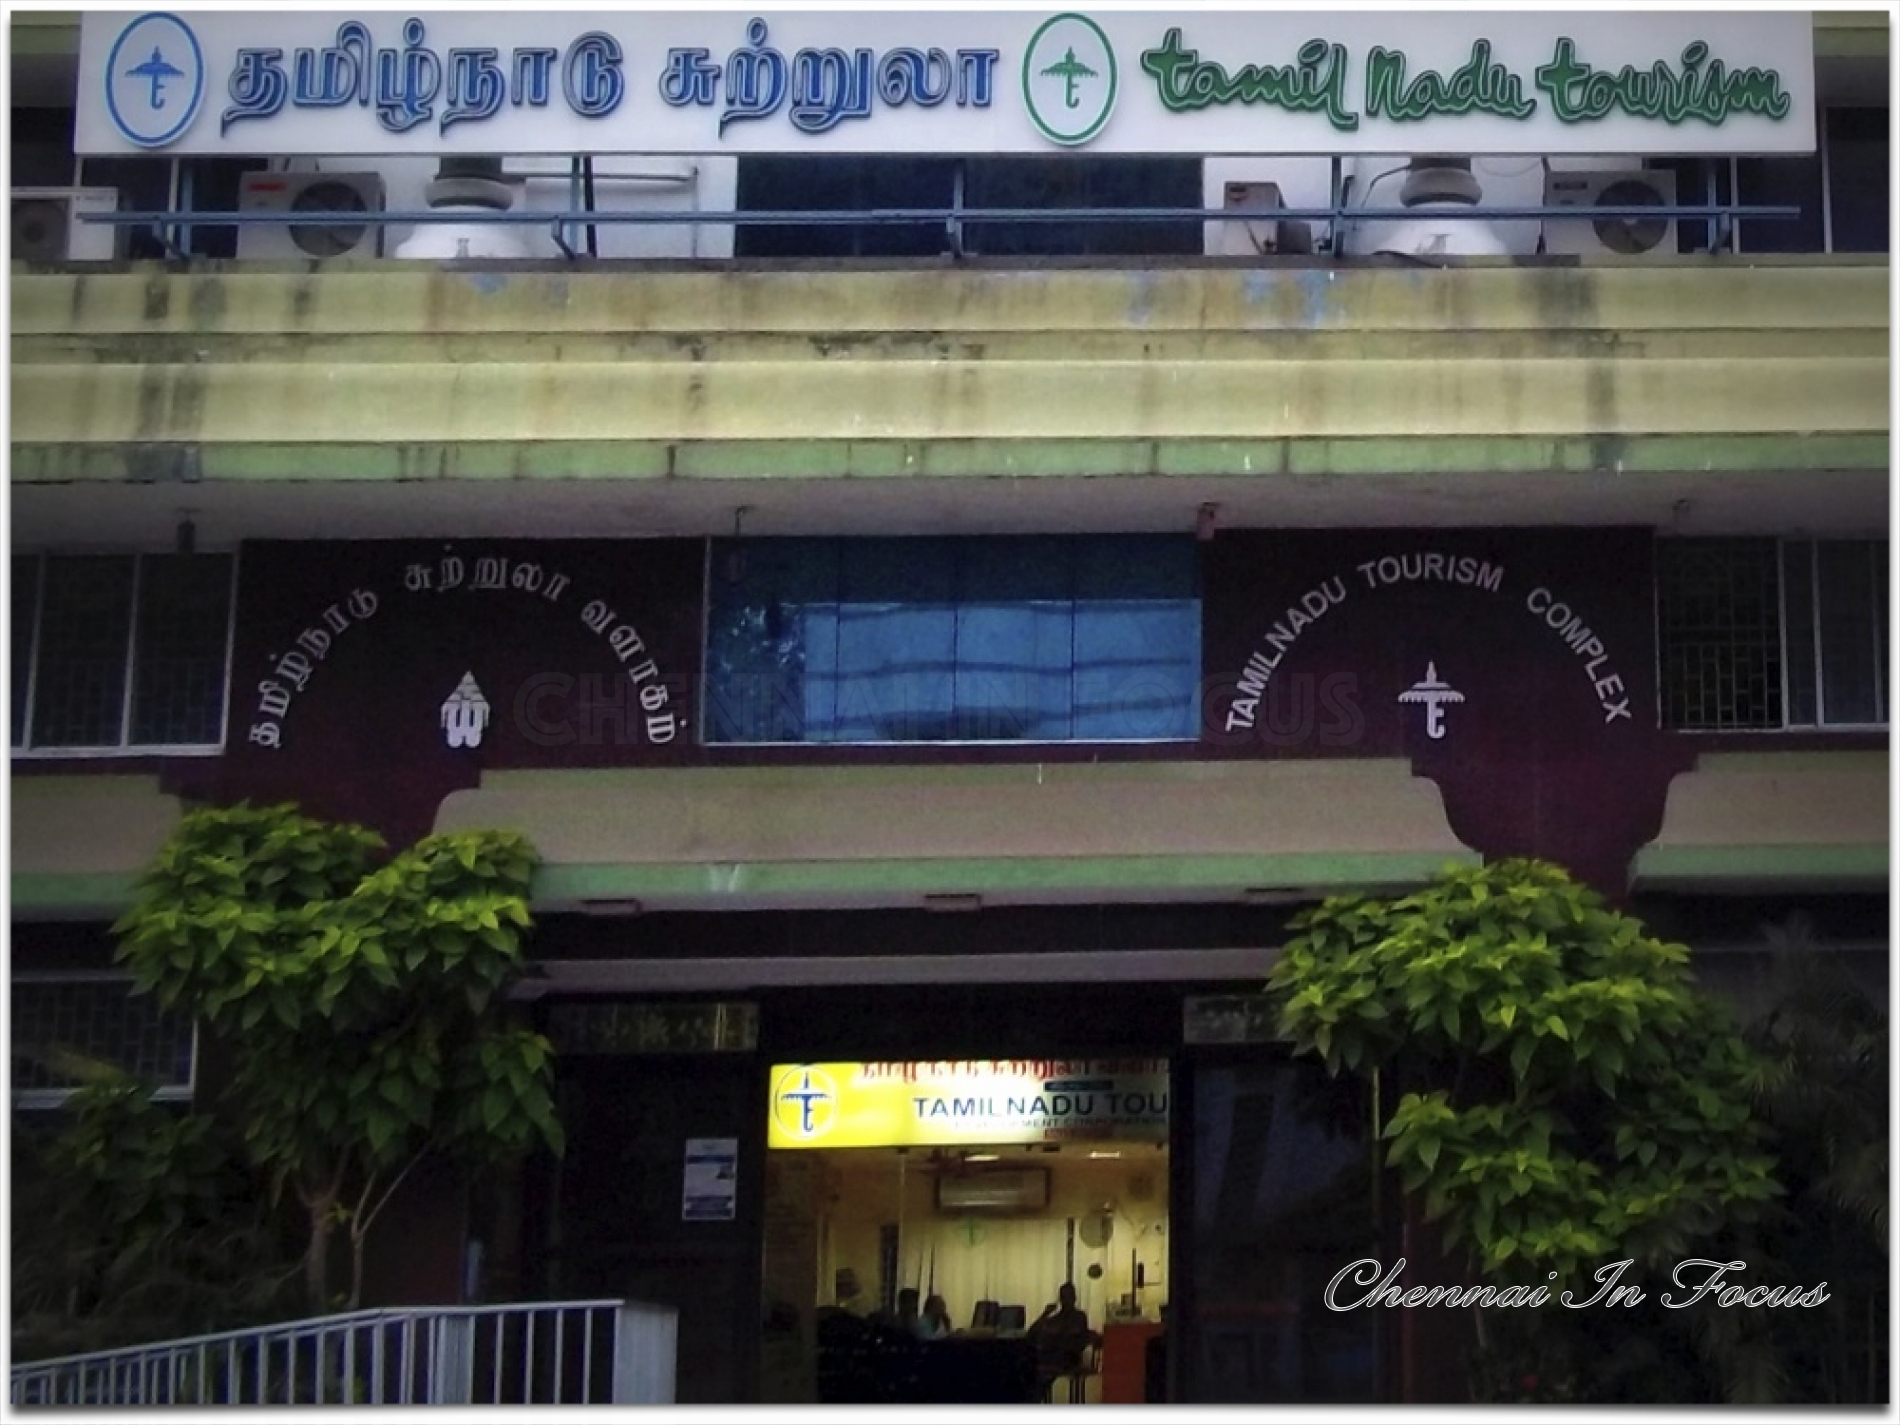 Tamil Nadu Tourism - Chennai In Focus